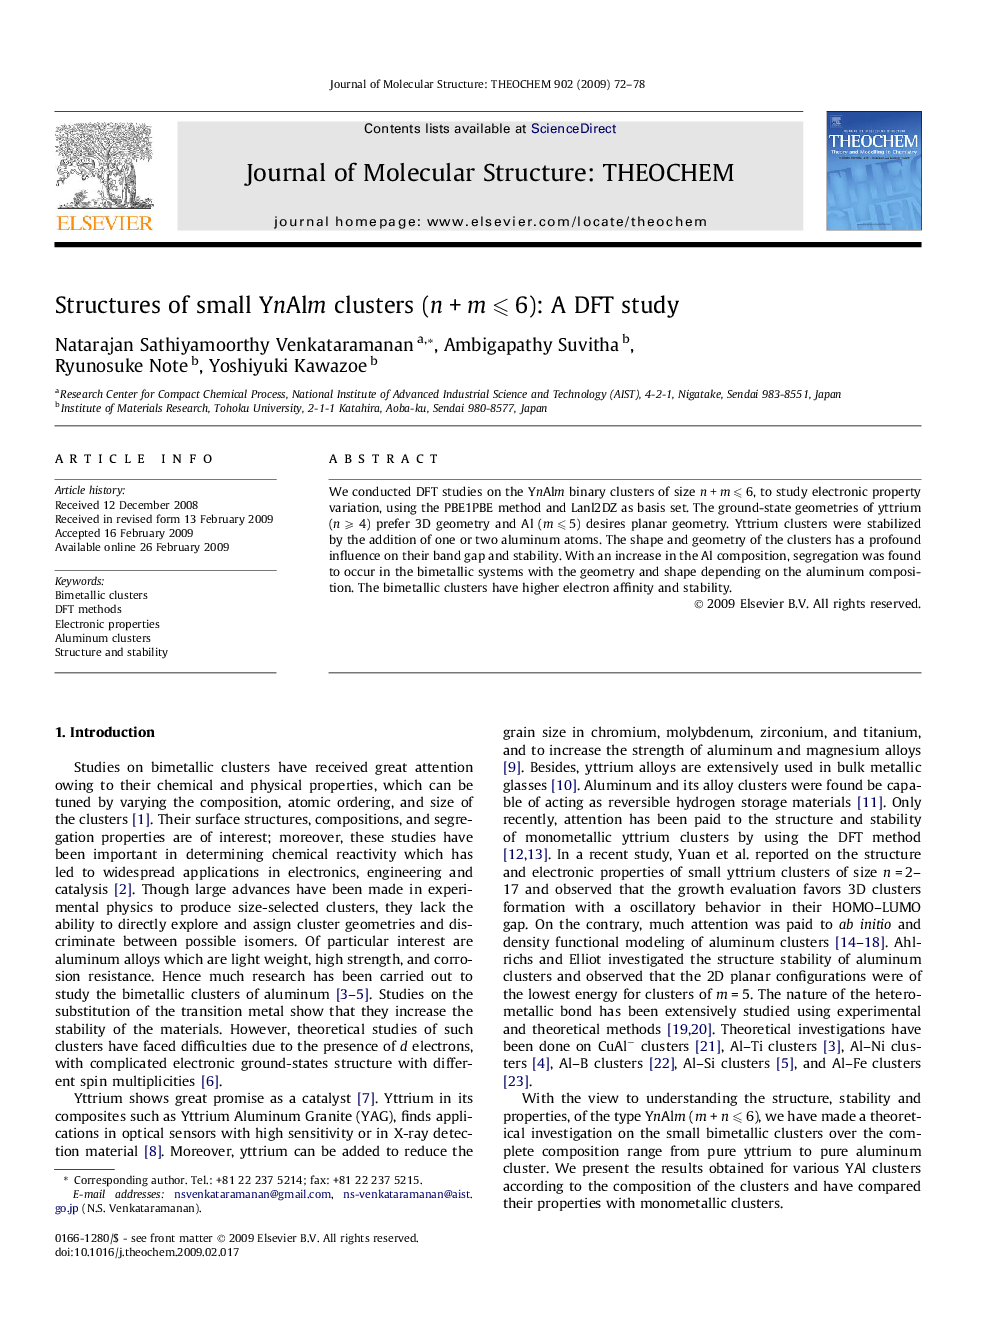 Structures of small YnAlm clusters (nÂ +Â mÂ â©½Â 6): A DFT study